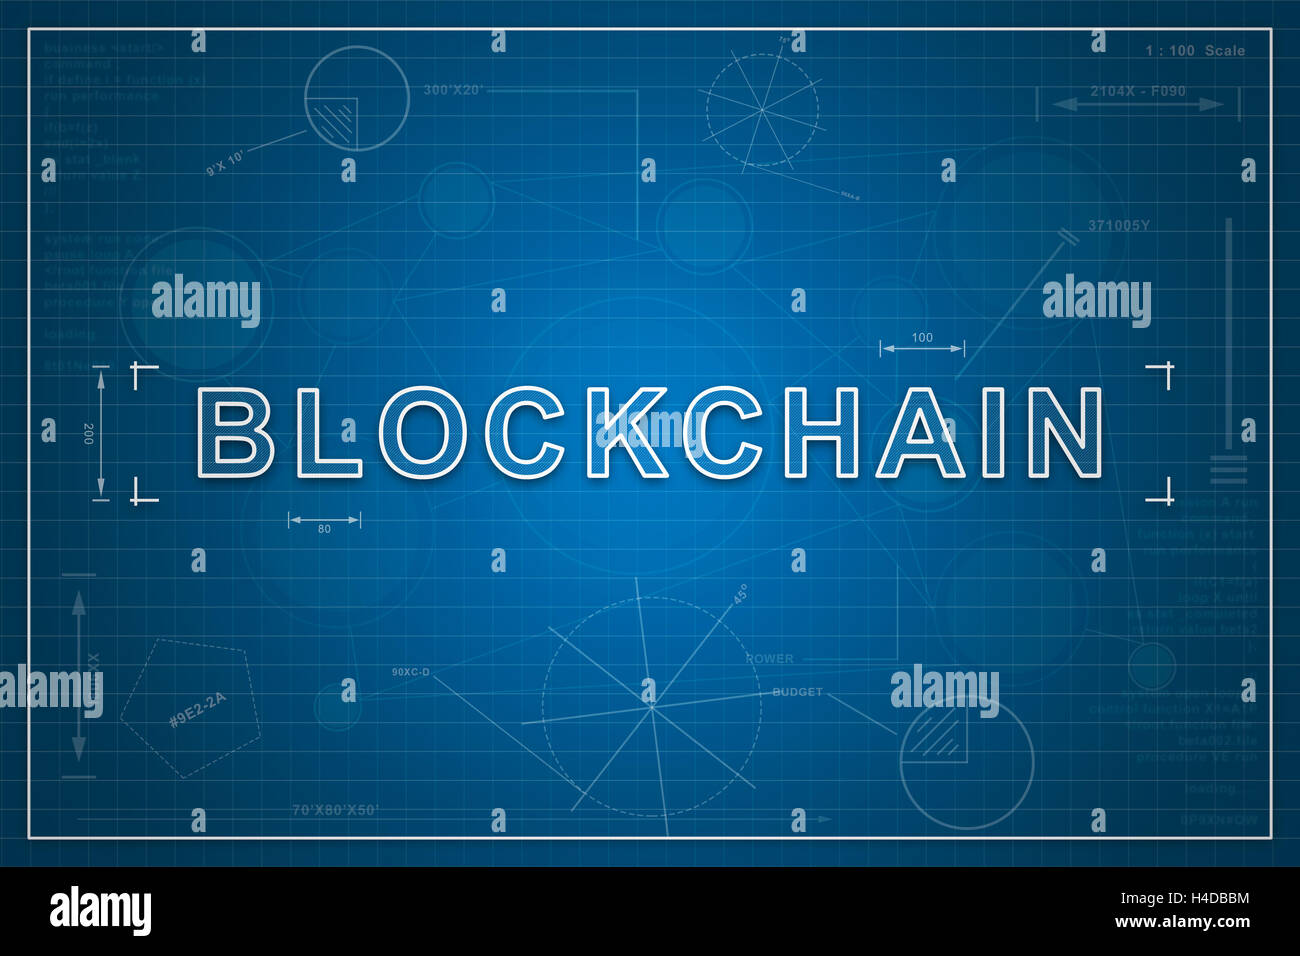 blockchain on paper blueprint background, business concept Stock Photo